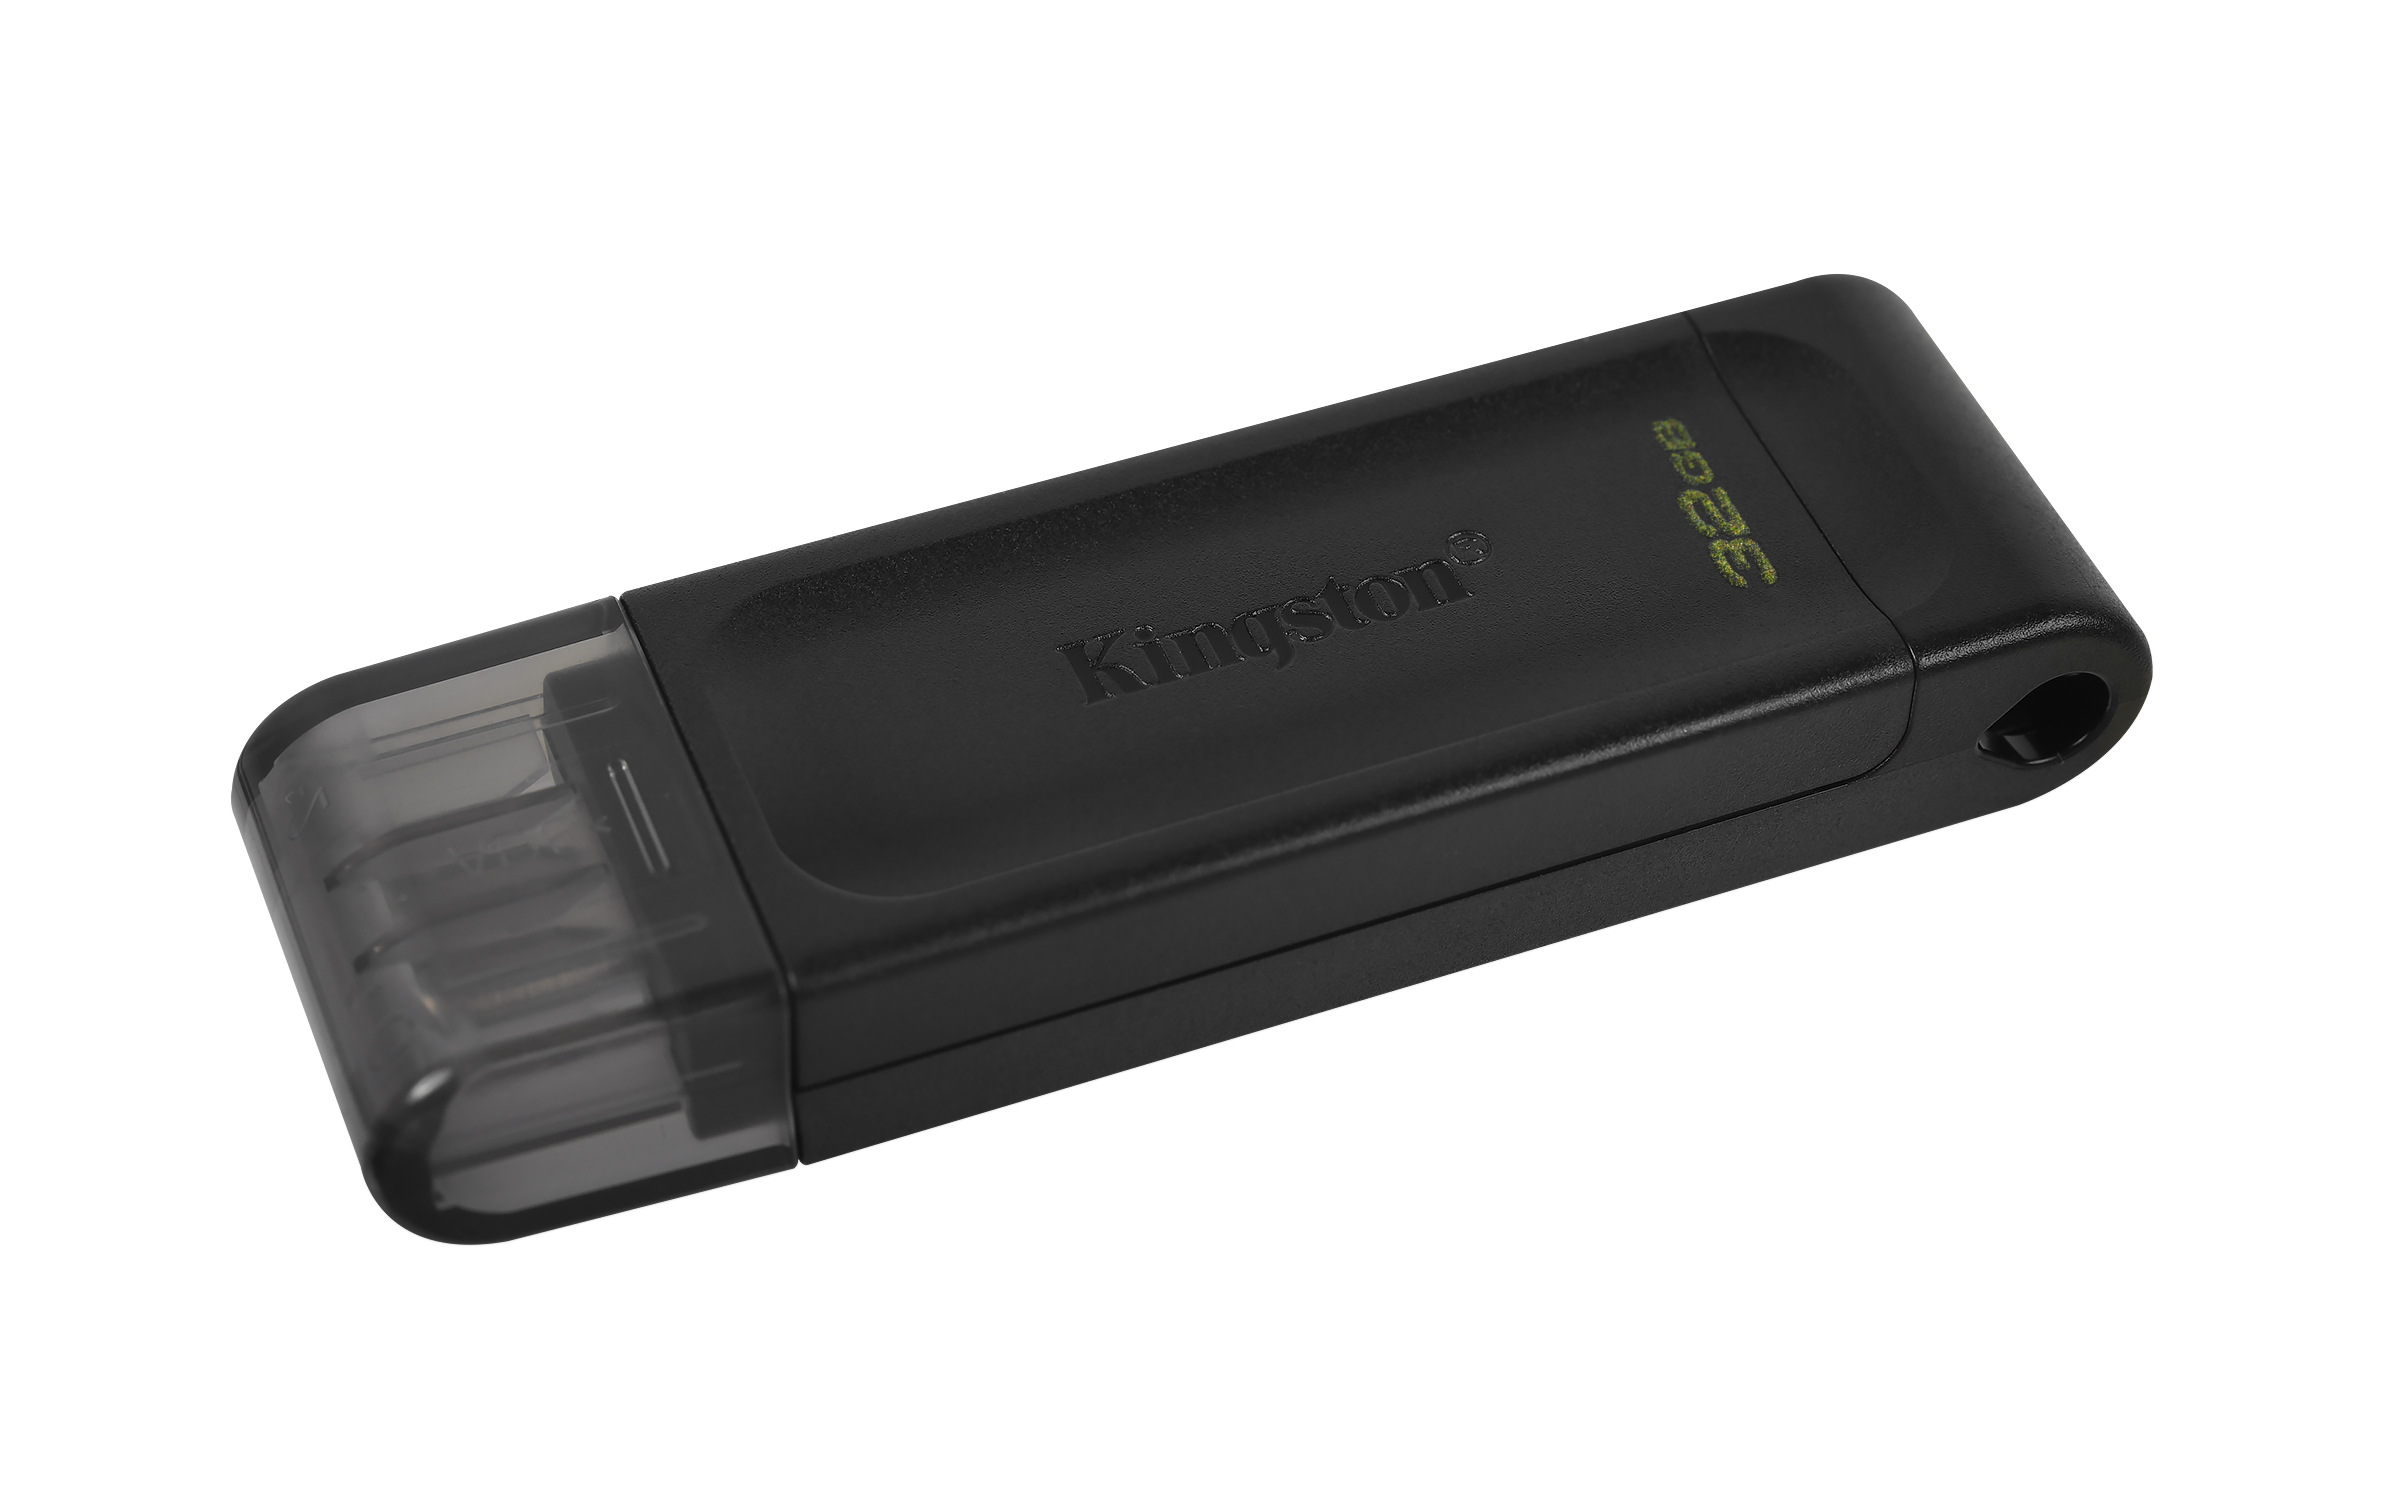 PEN DRIVE KINGSTON DT70 32GB TYPE-C USB 3.2